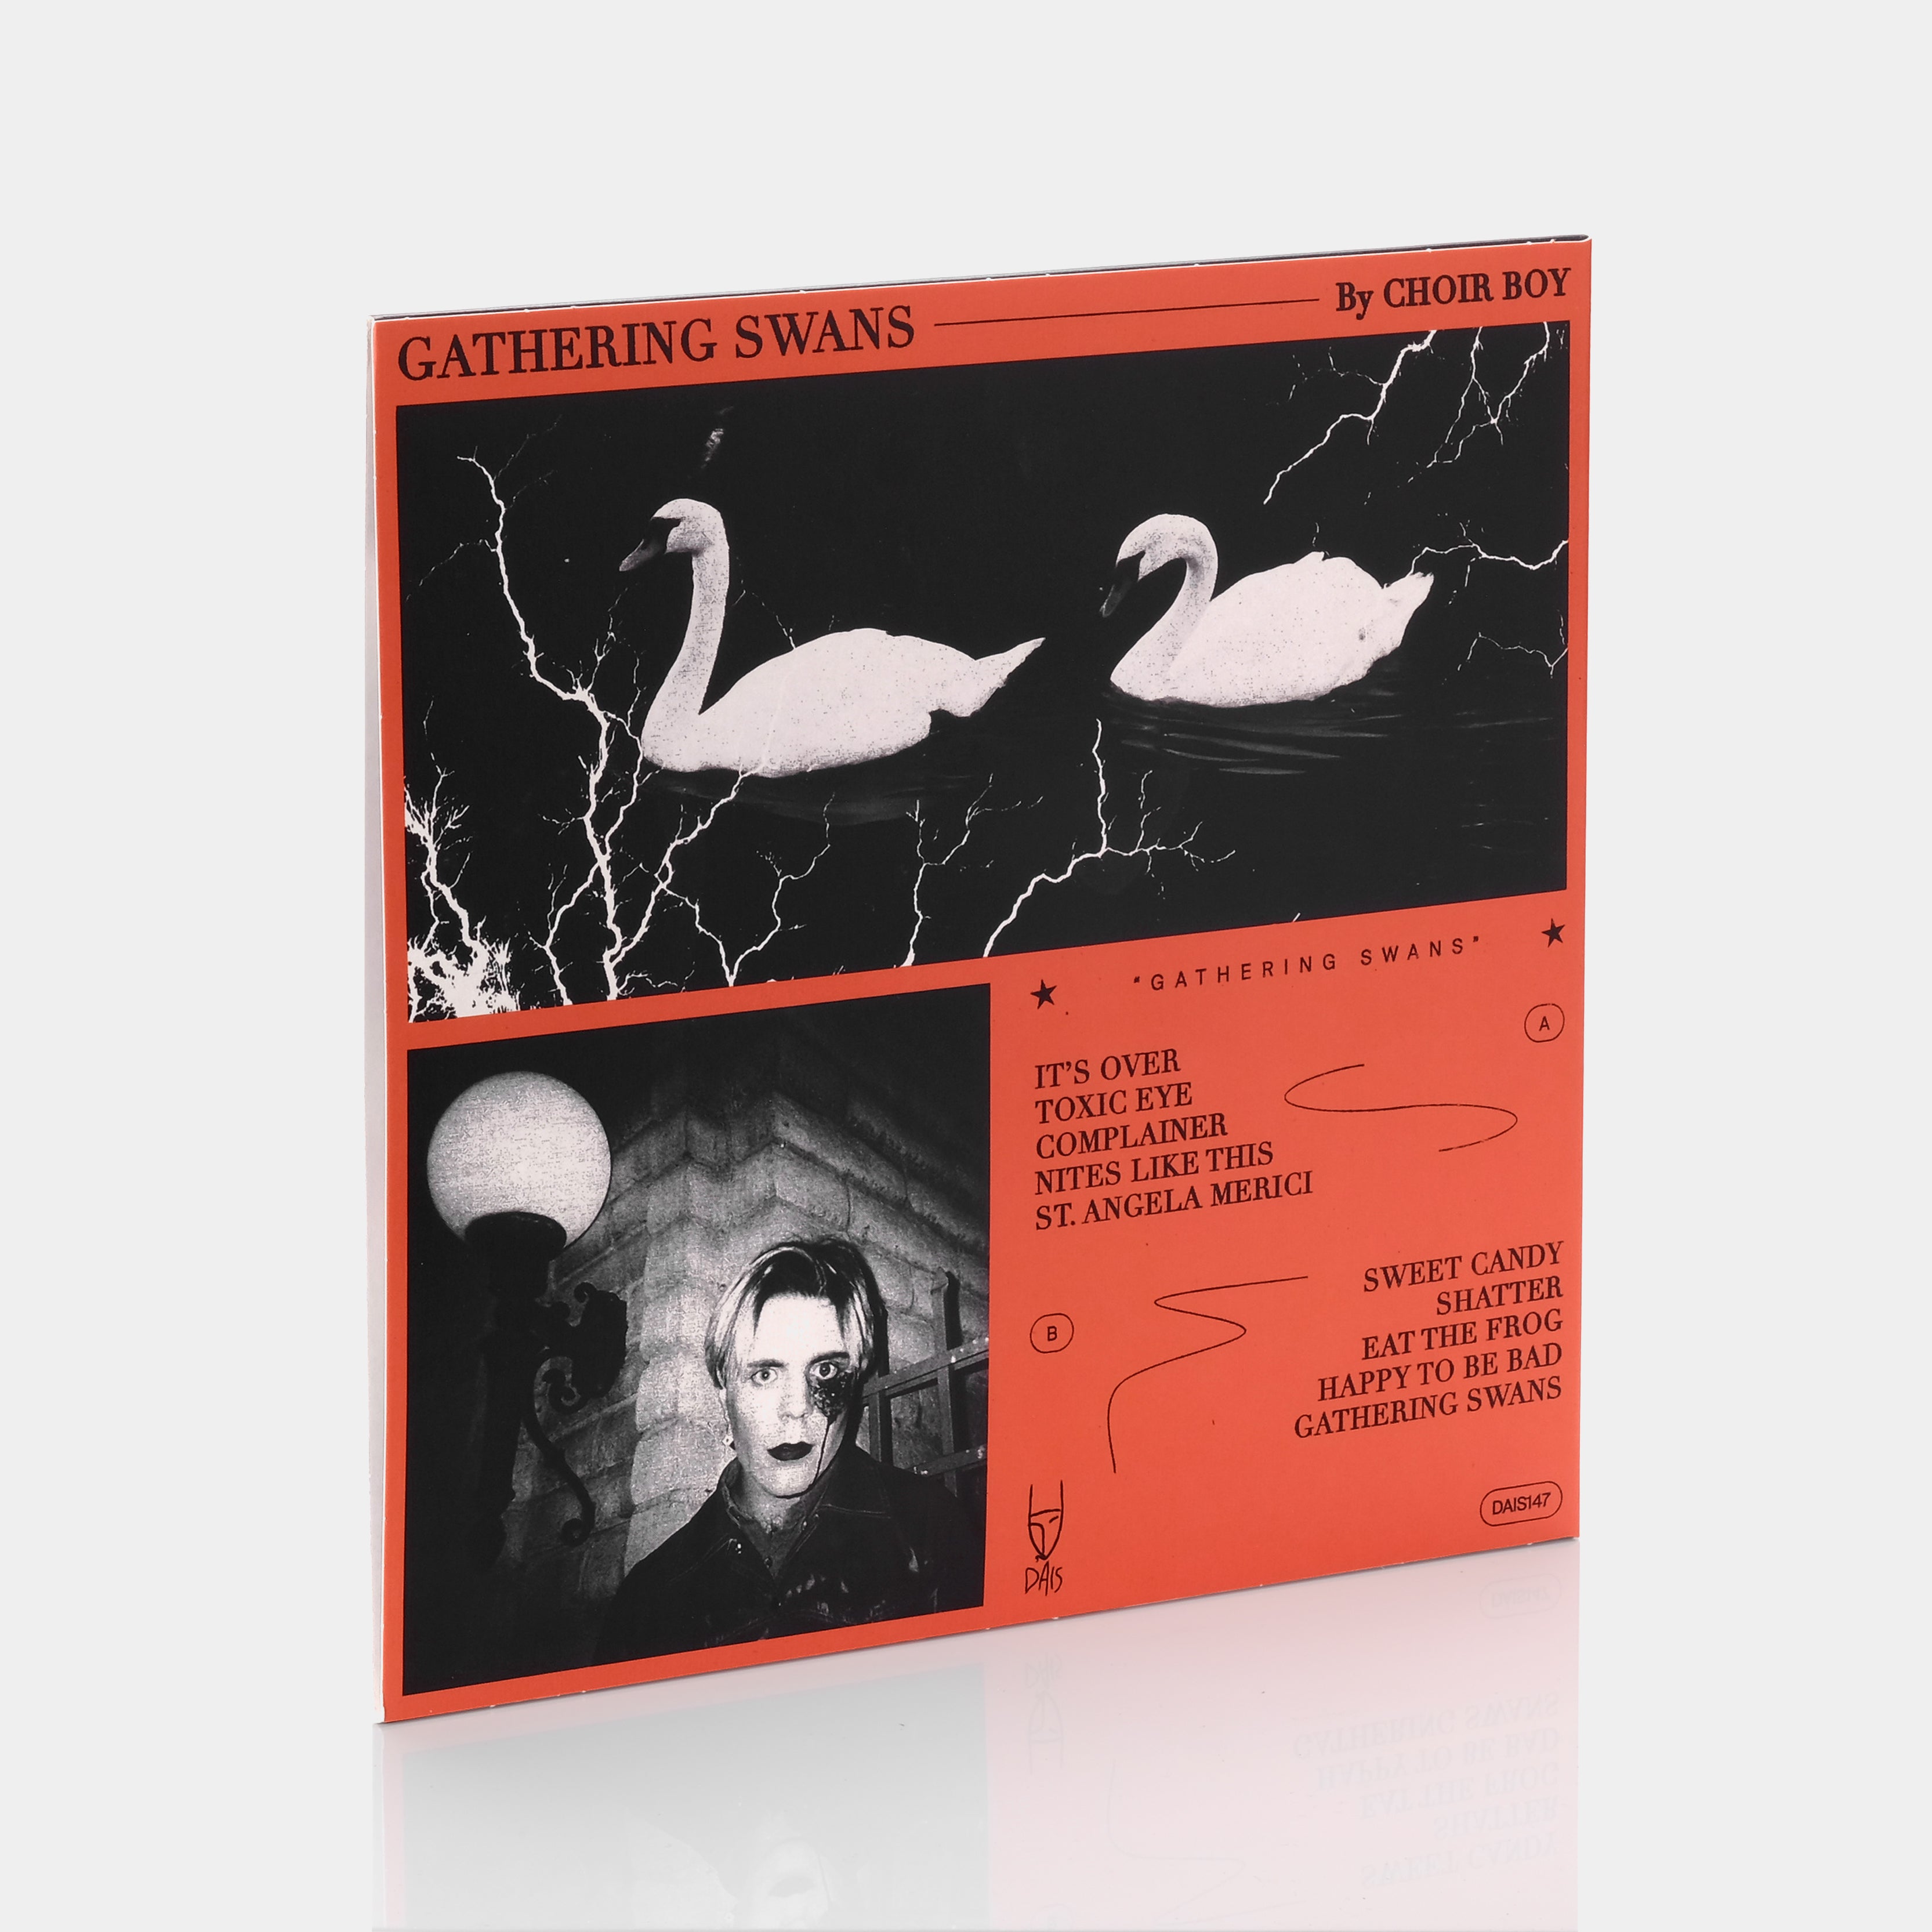 Choir Boy - Gathering Swans Limited Edition LP Black/Orange/Red Splatter Vinyl Record